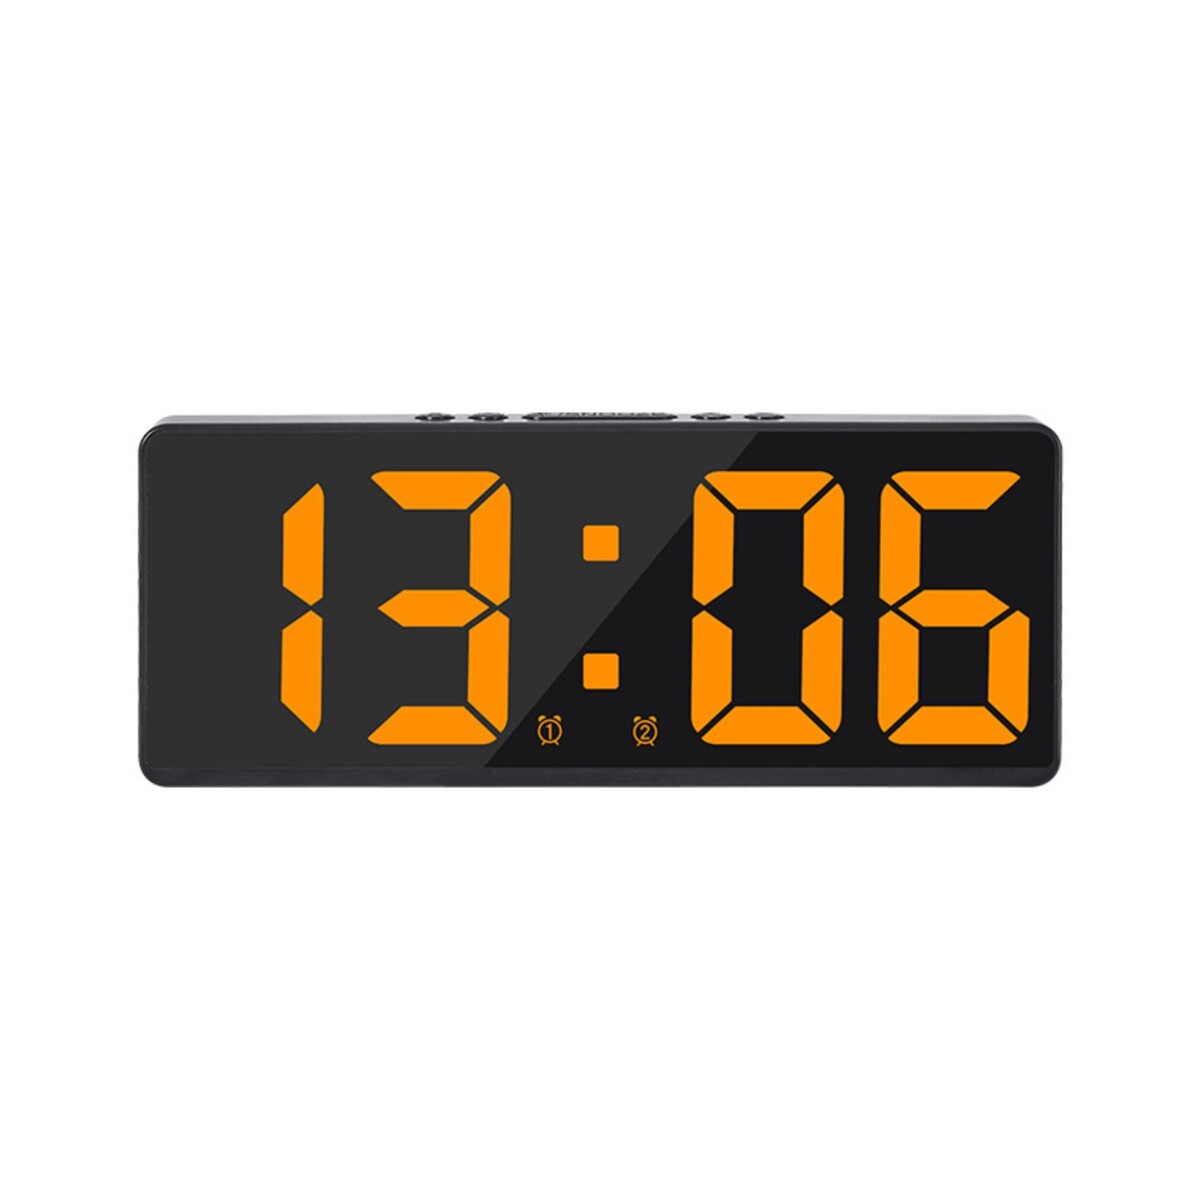 Часы - будильник электронные настольные с термометром, календарем, 15 х 6.3 см, ааа, usb часы электронные настольные c термометром гигрометром 7 х 14 5 х 4 см